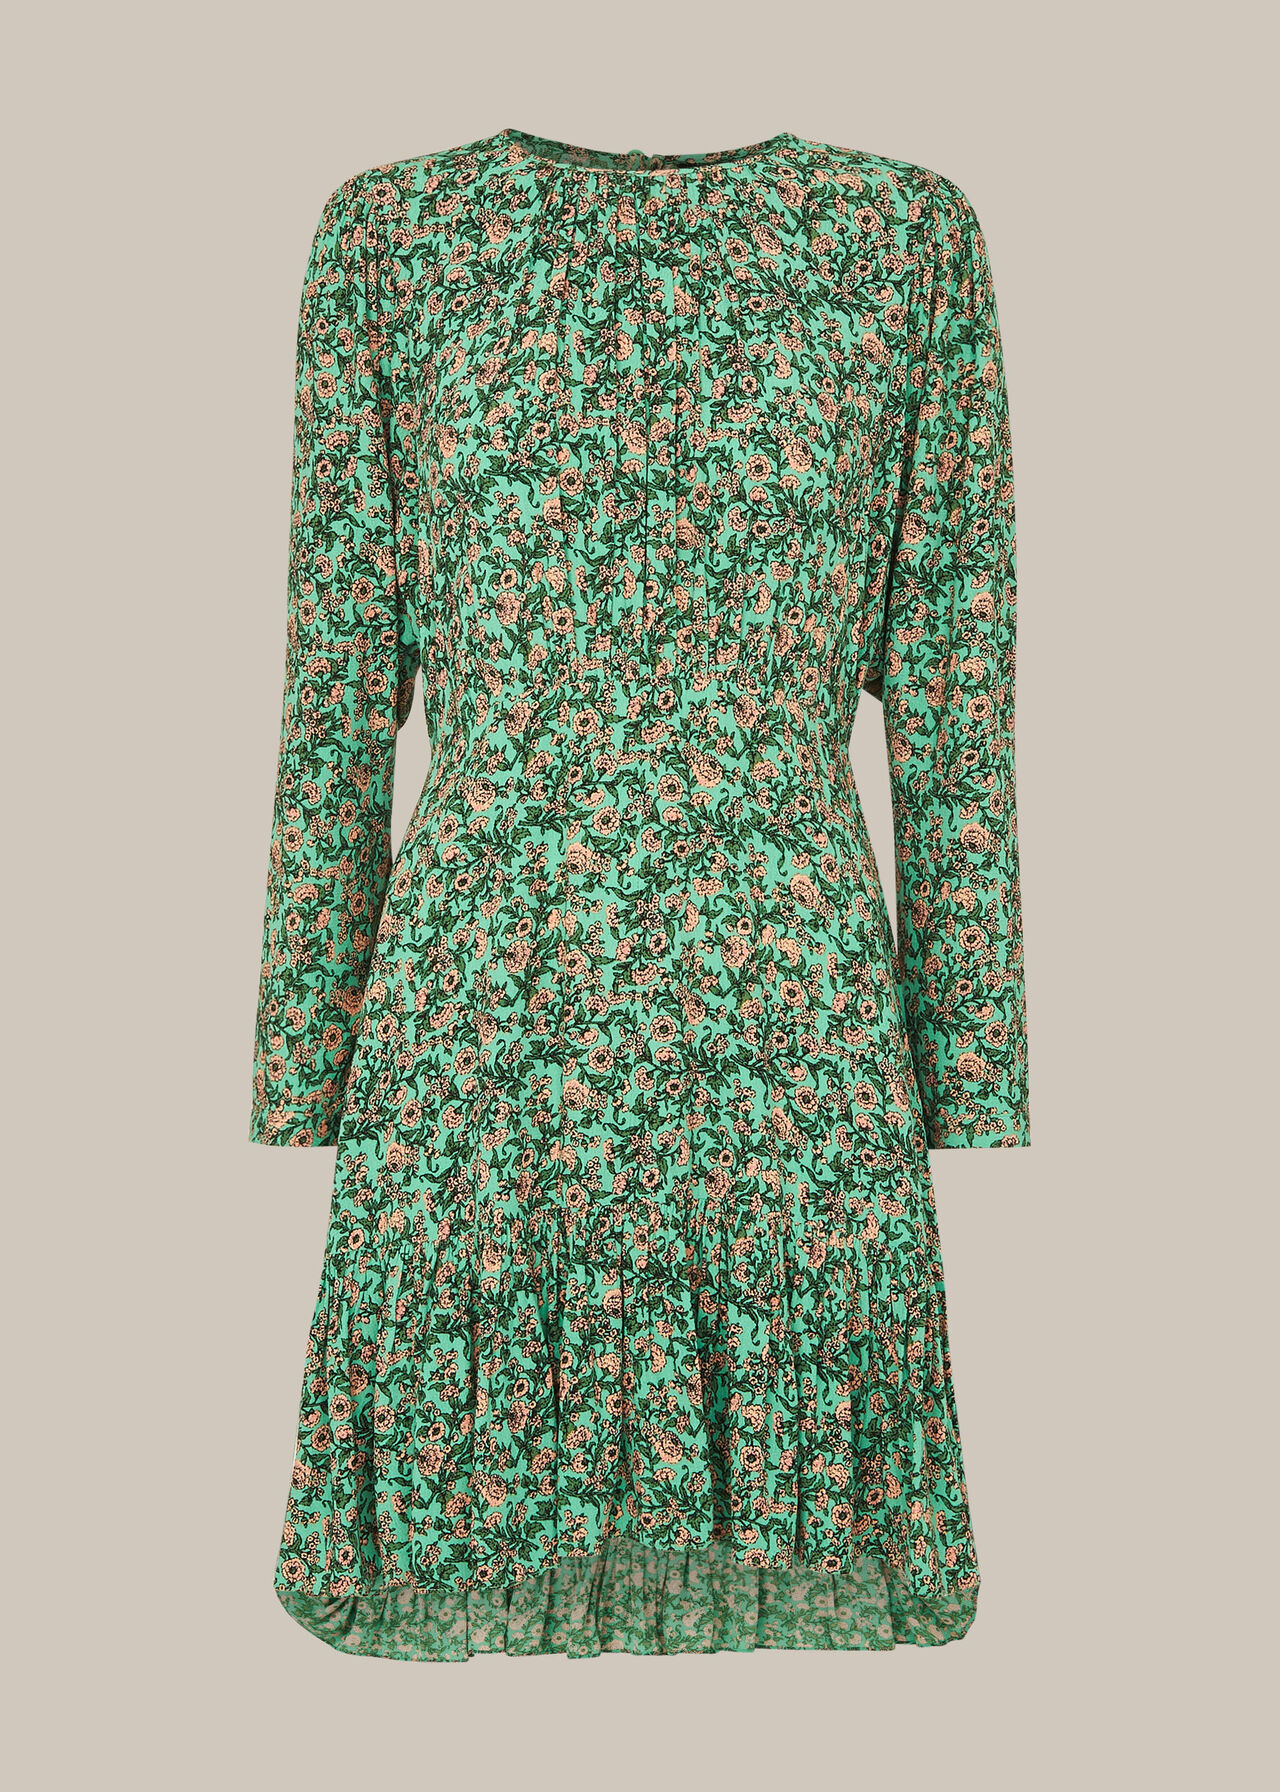 Multicolour Heath Floral Print Dress | WHISTLES